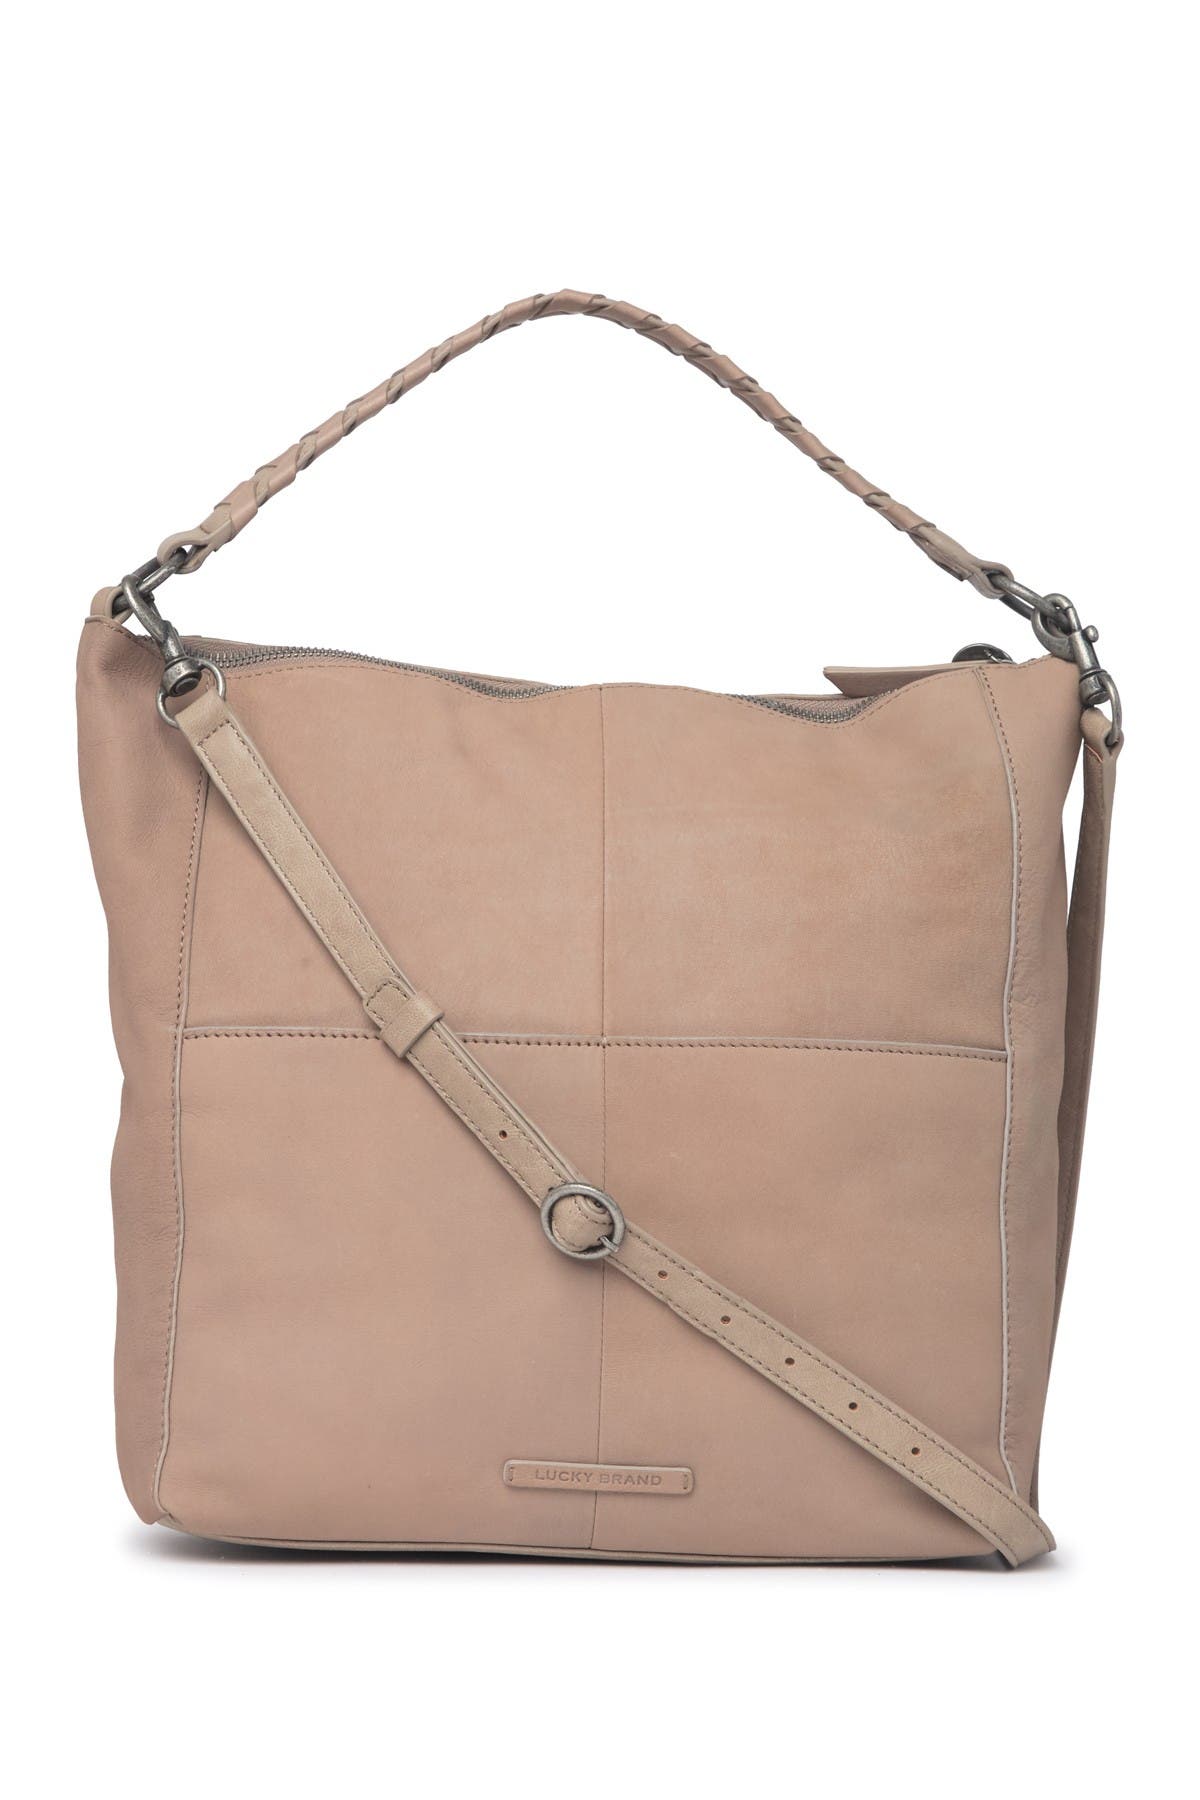 Lucky Brand | Vala Leather Hobo Shoulder Bag | Nordstrom Rack